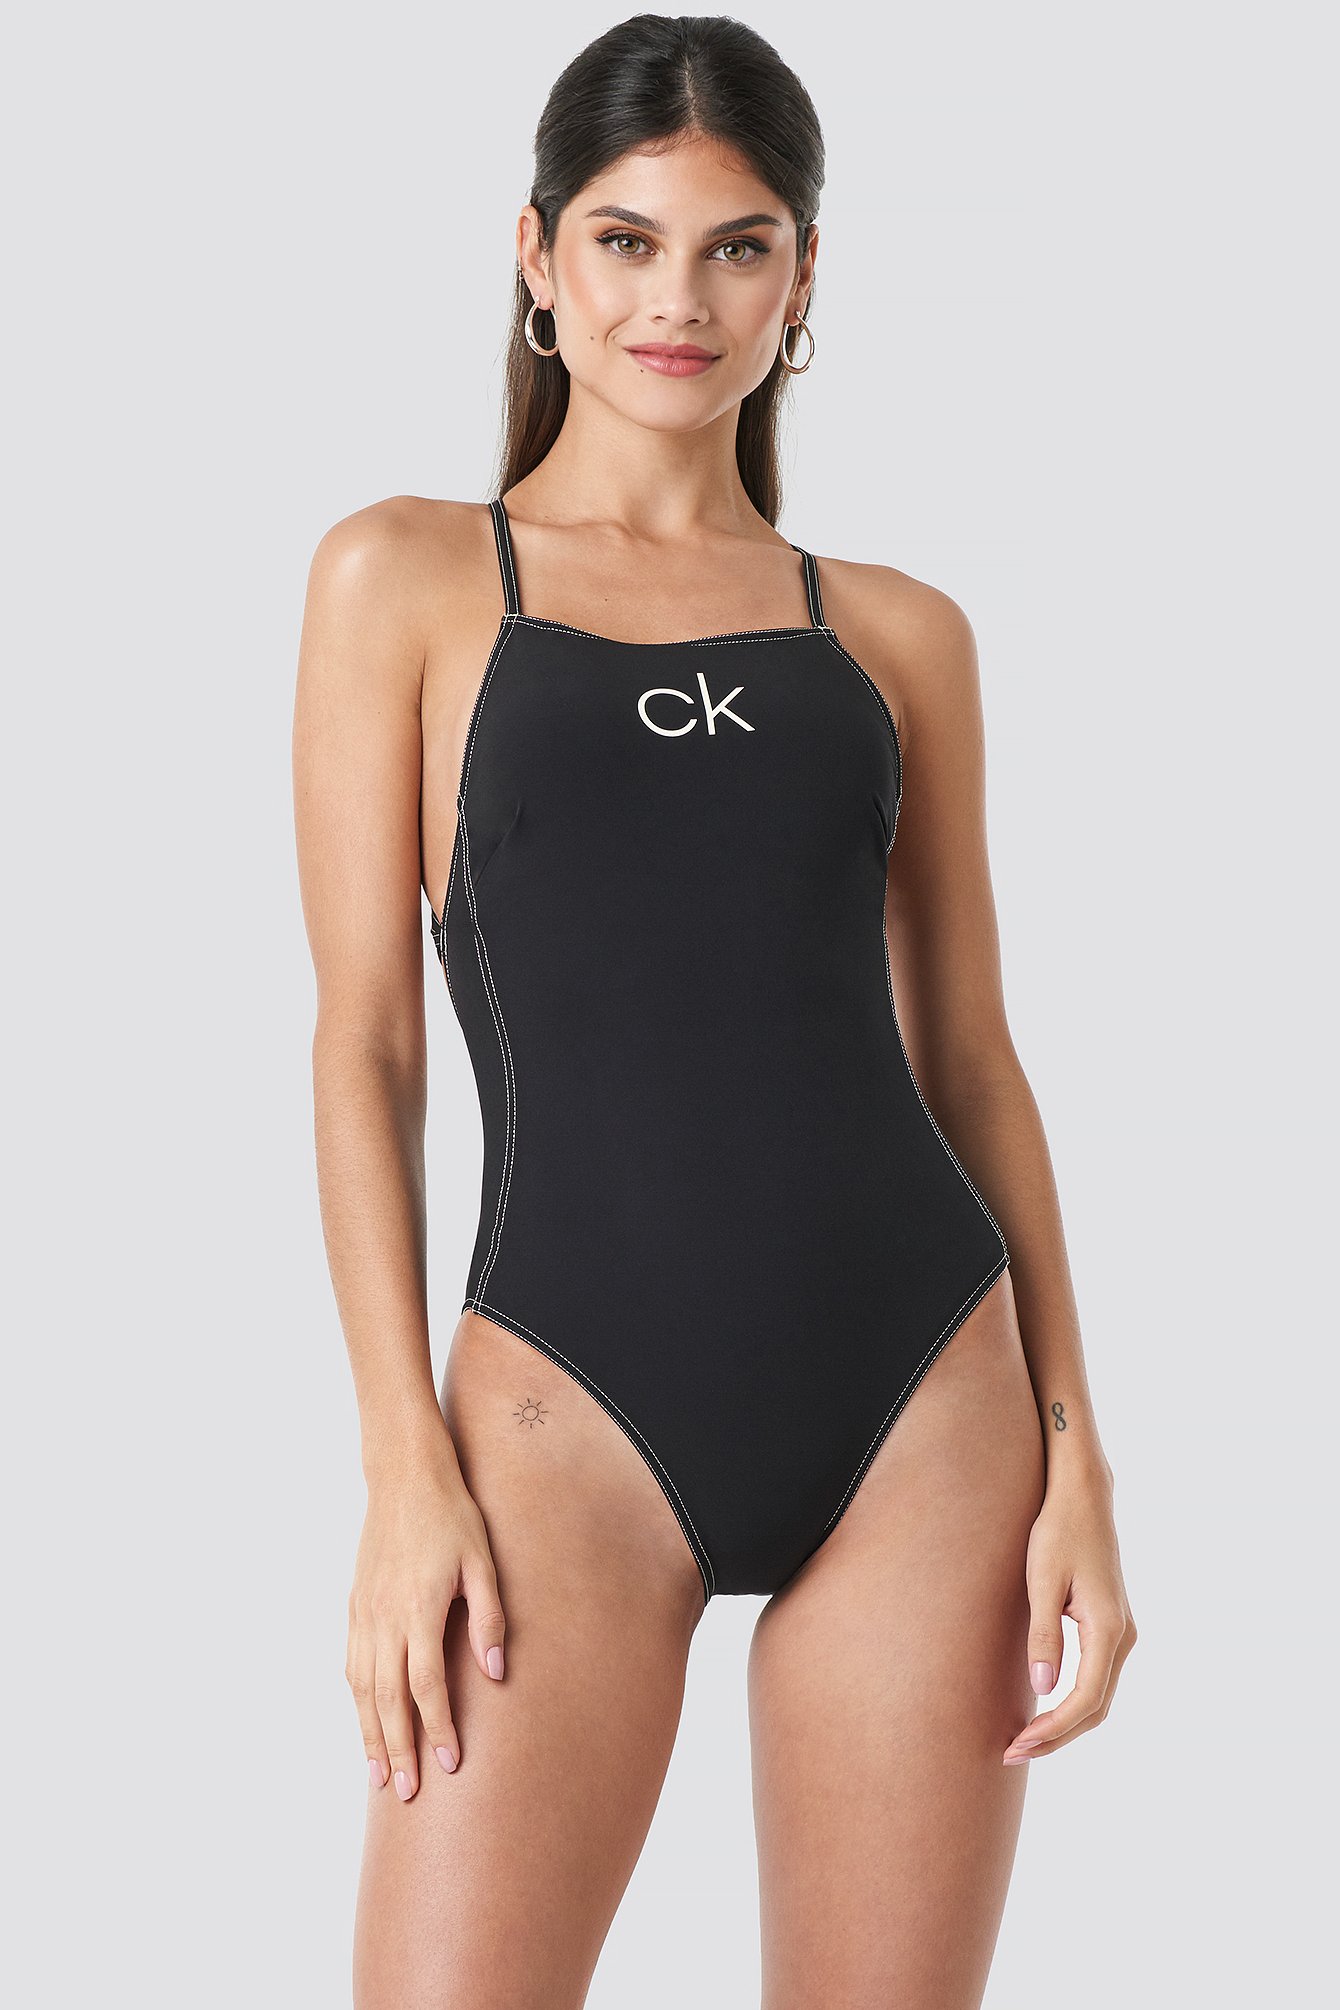 ck swimwear